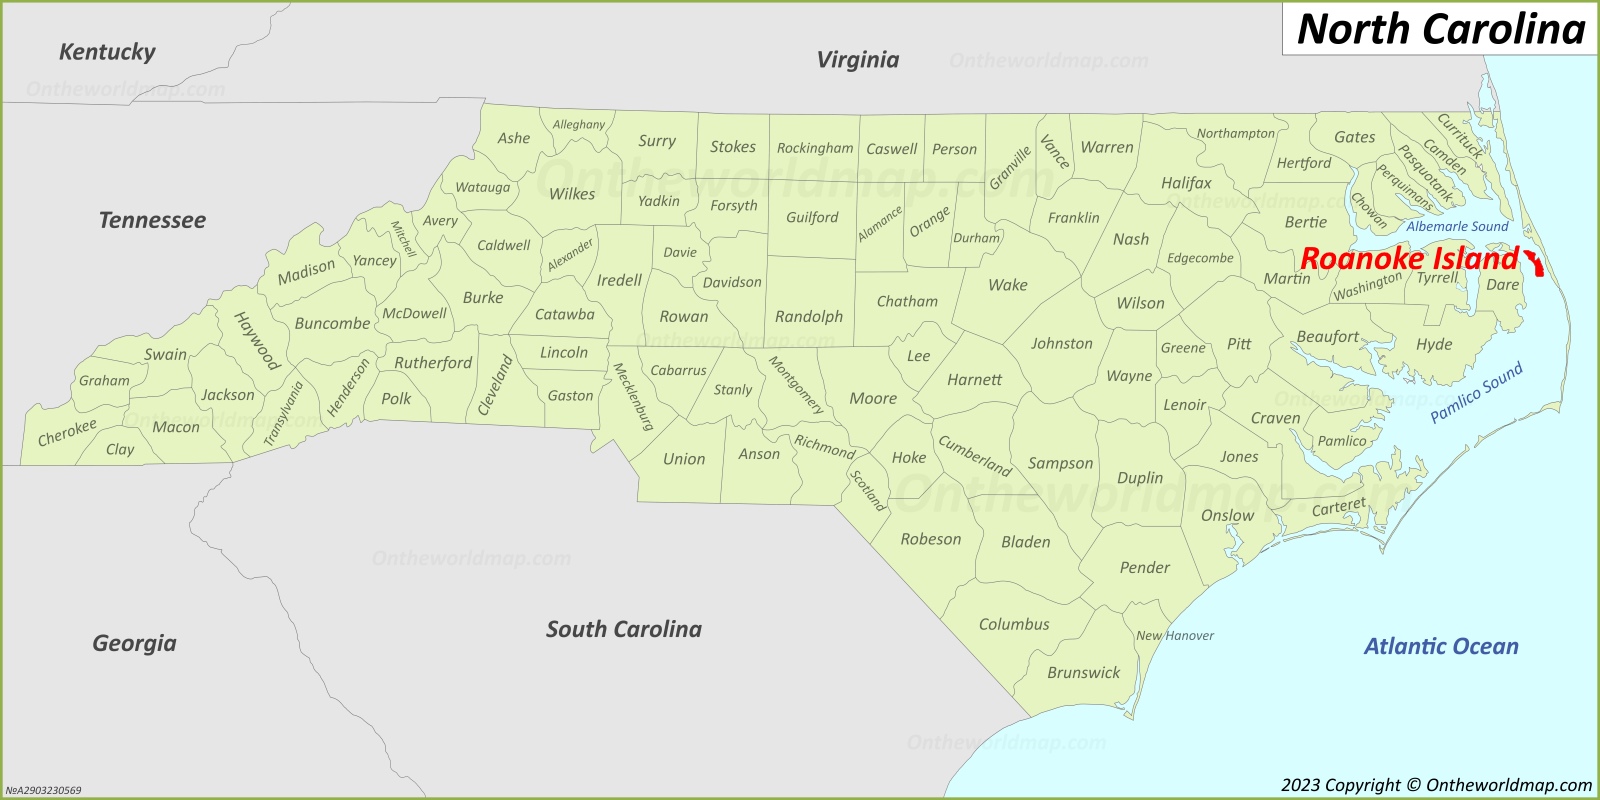 Roanoke Island Location On The North Carolina Map